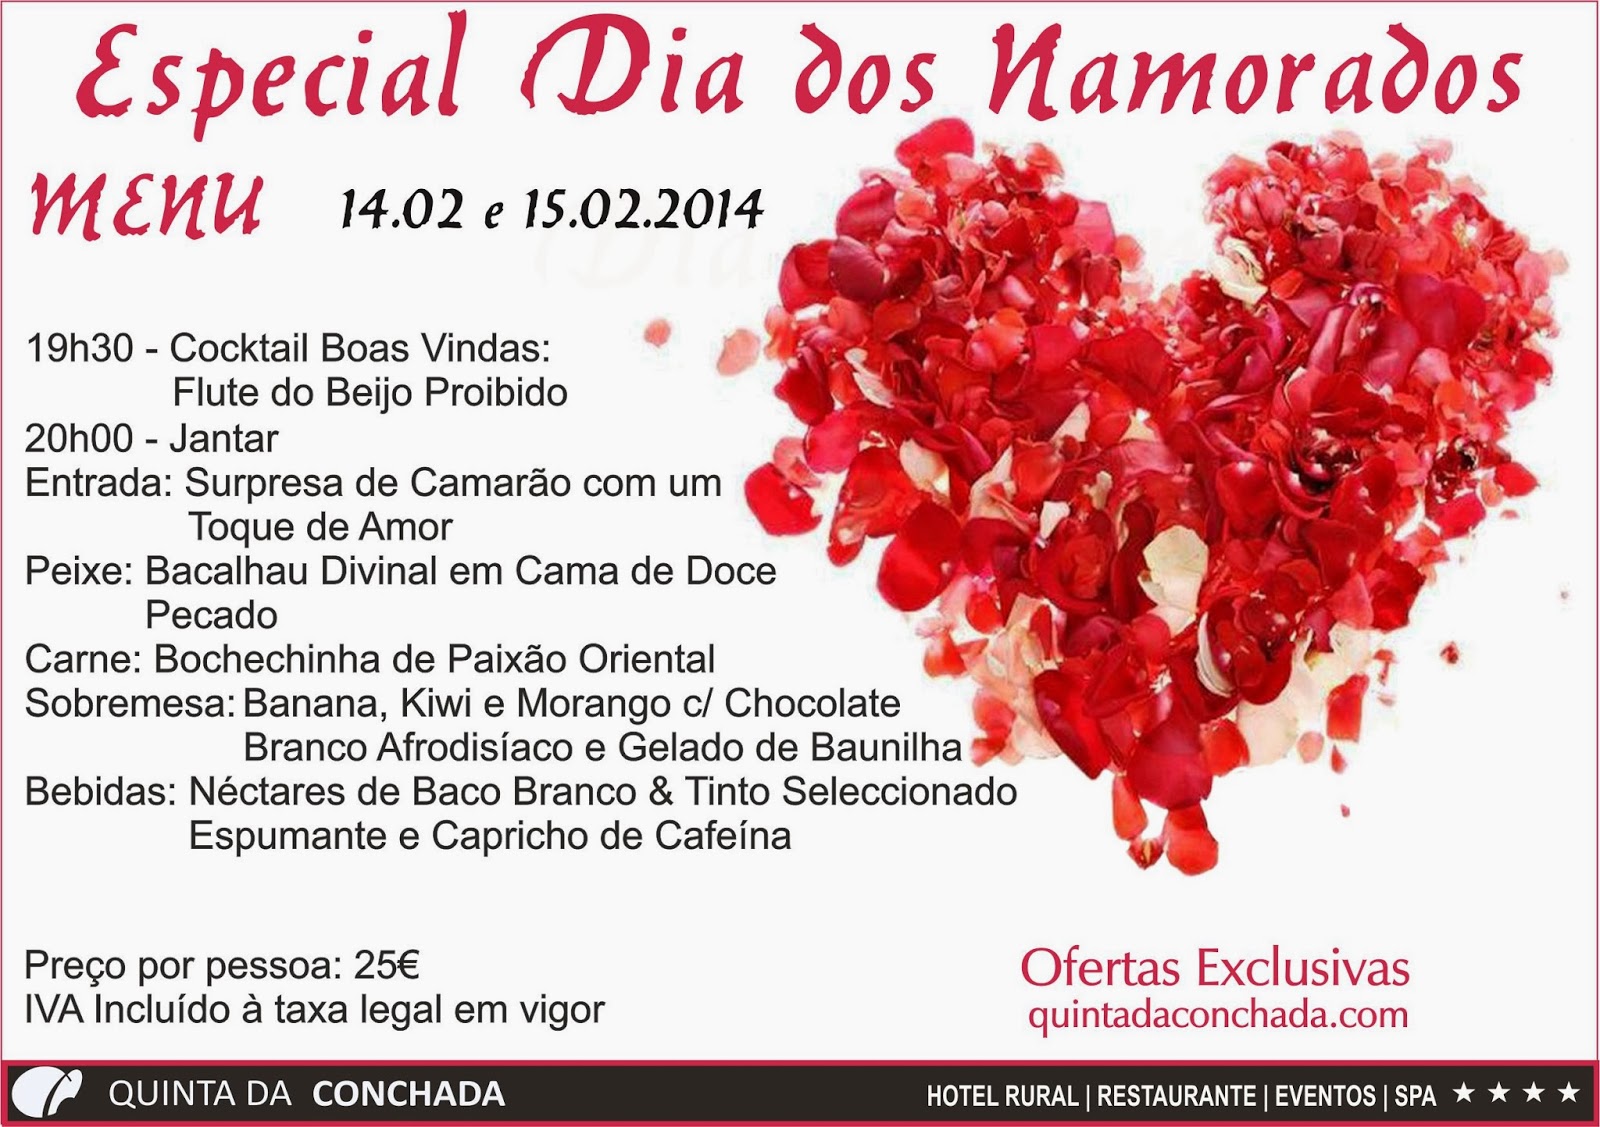 HOTEL RURAL QUINTA DA CONCHADA: Menu Dia dos Namorados 2014